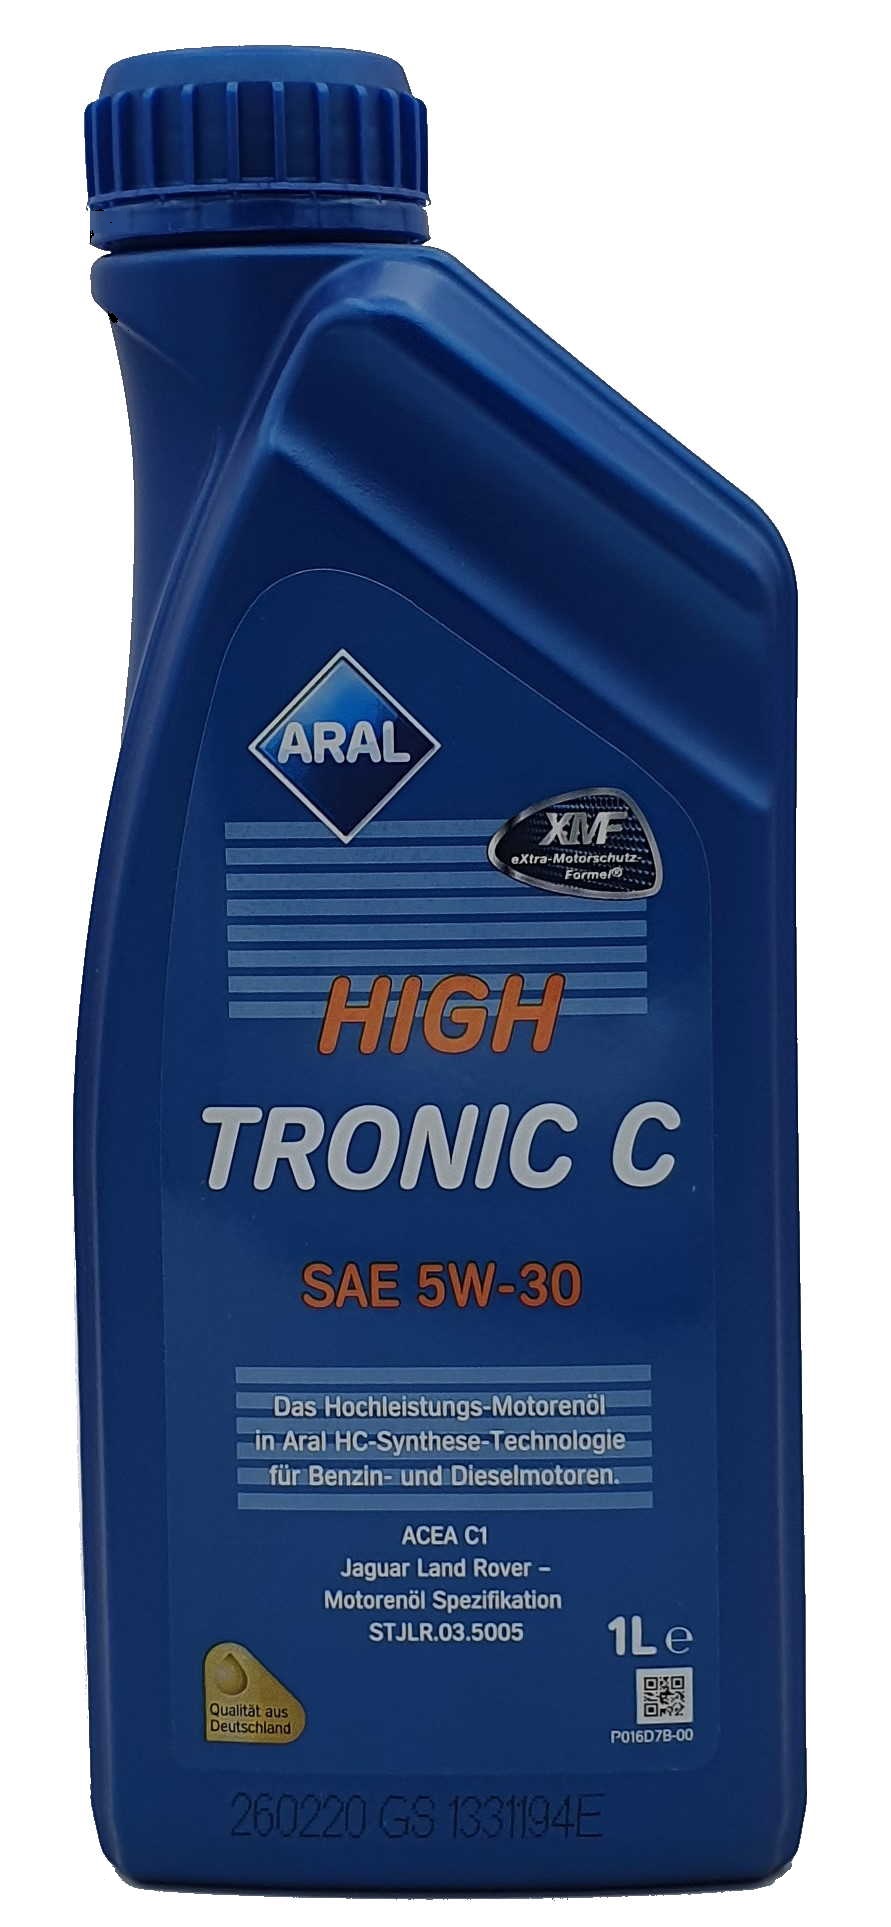 Aral HighTronic C 5W-30 1 Liter